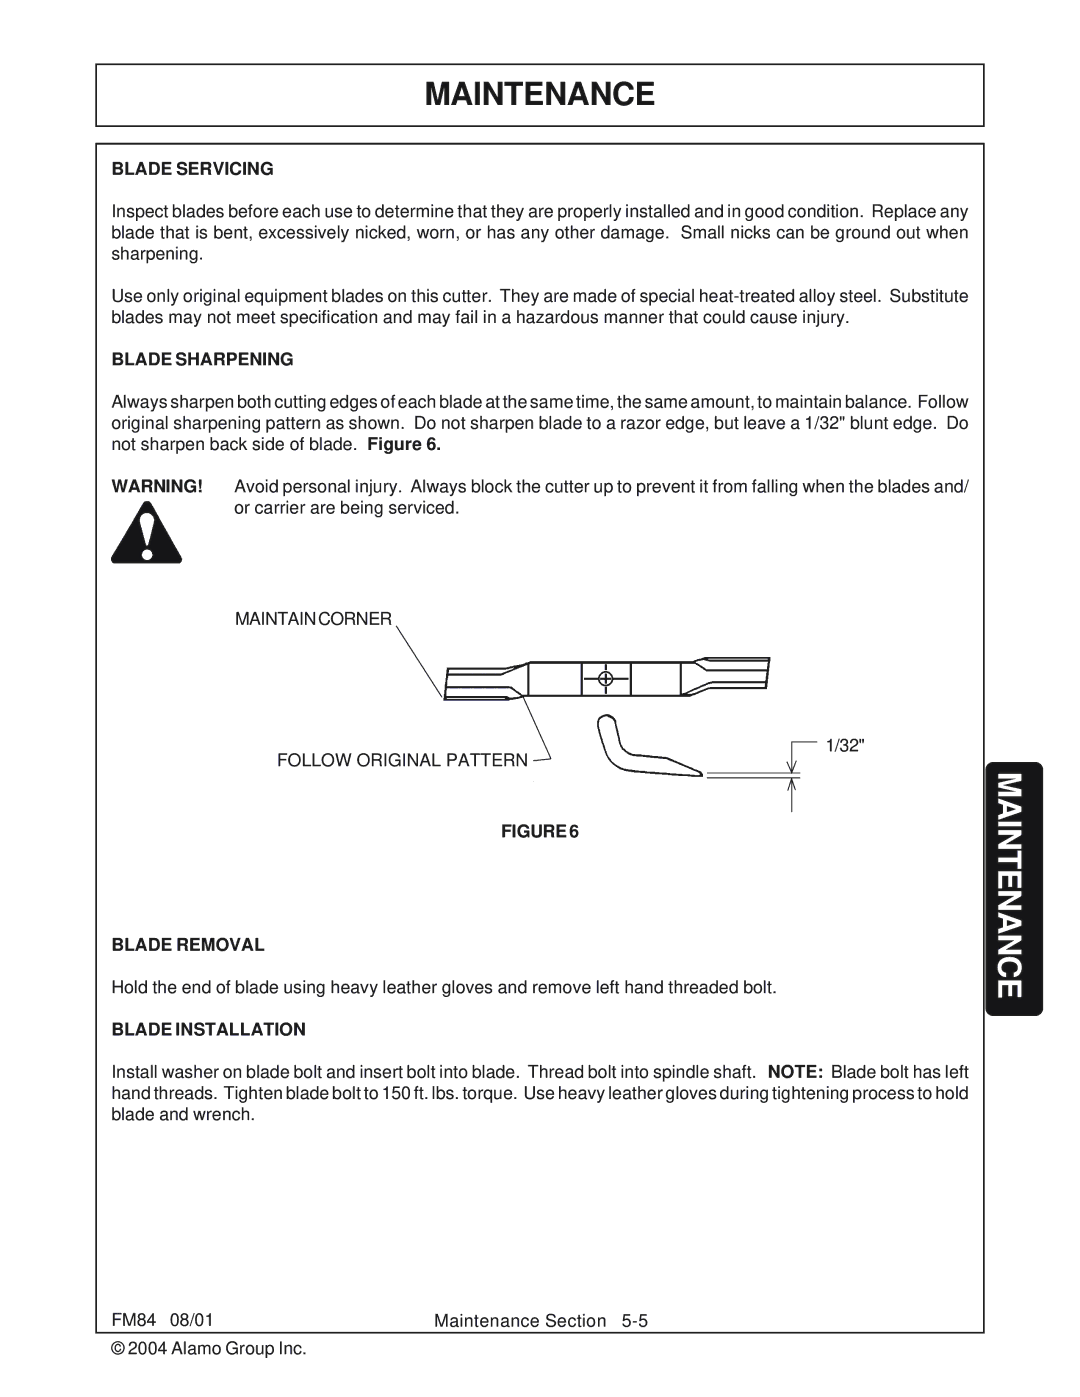 Servis-Rhino FM84 manual Blade Servicing, Blade Sharpening, Blade Removal, Blade Installation 